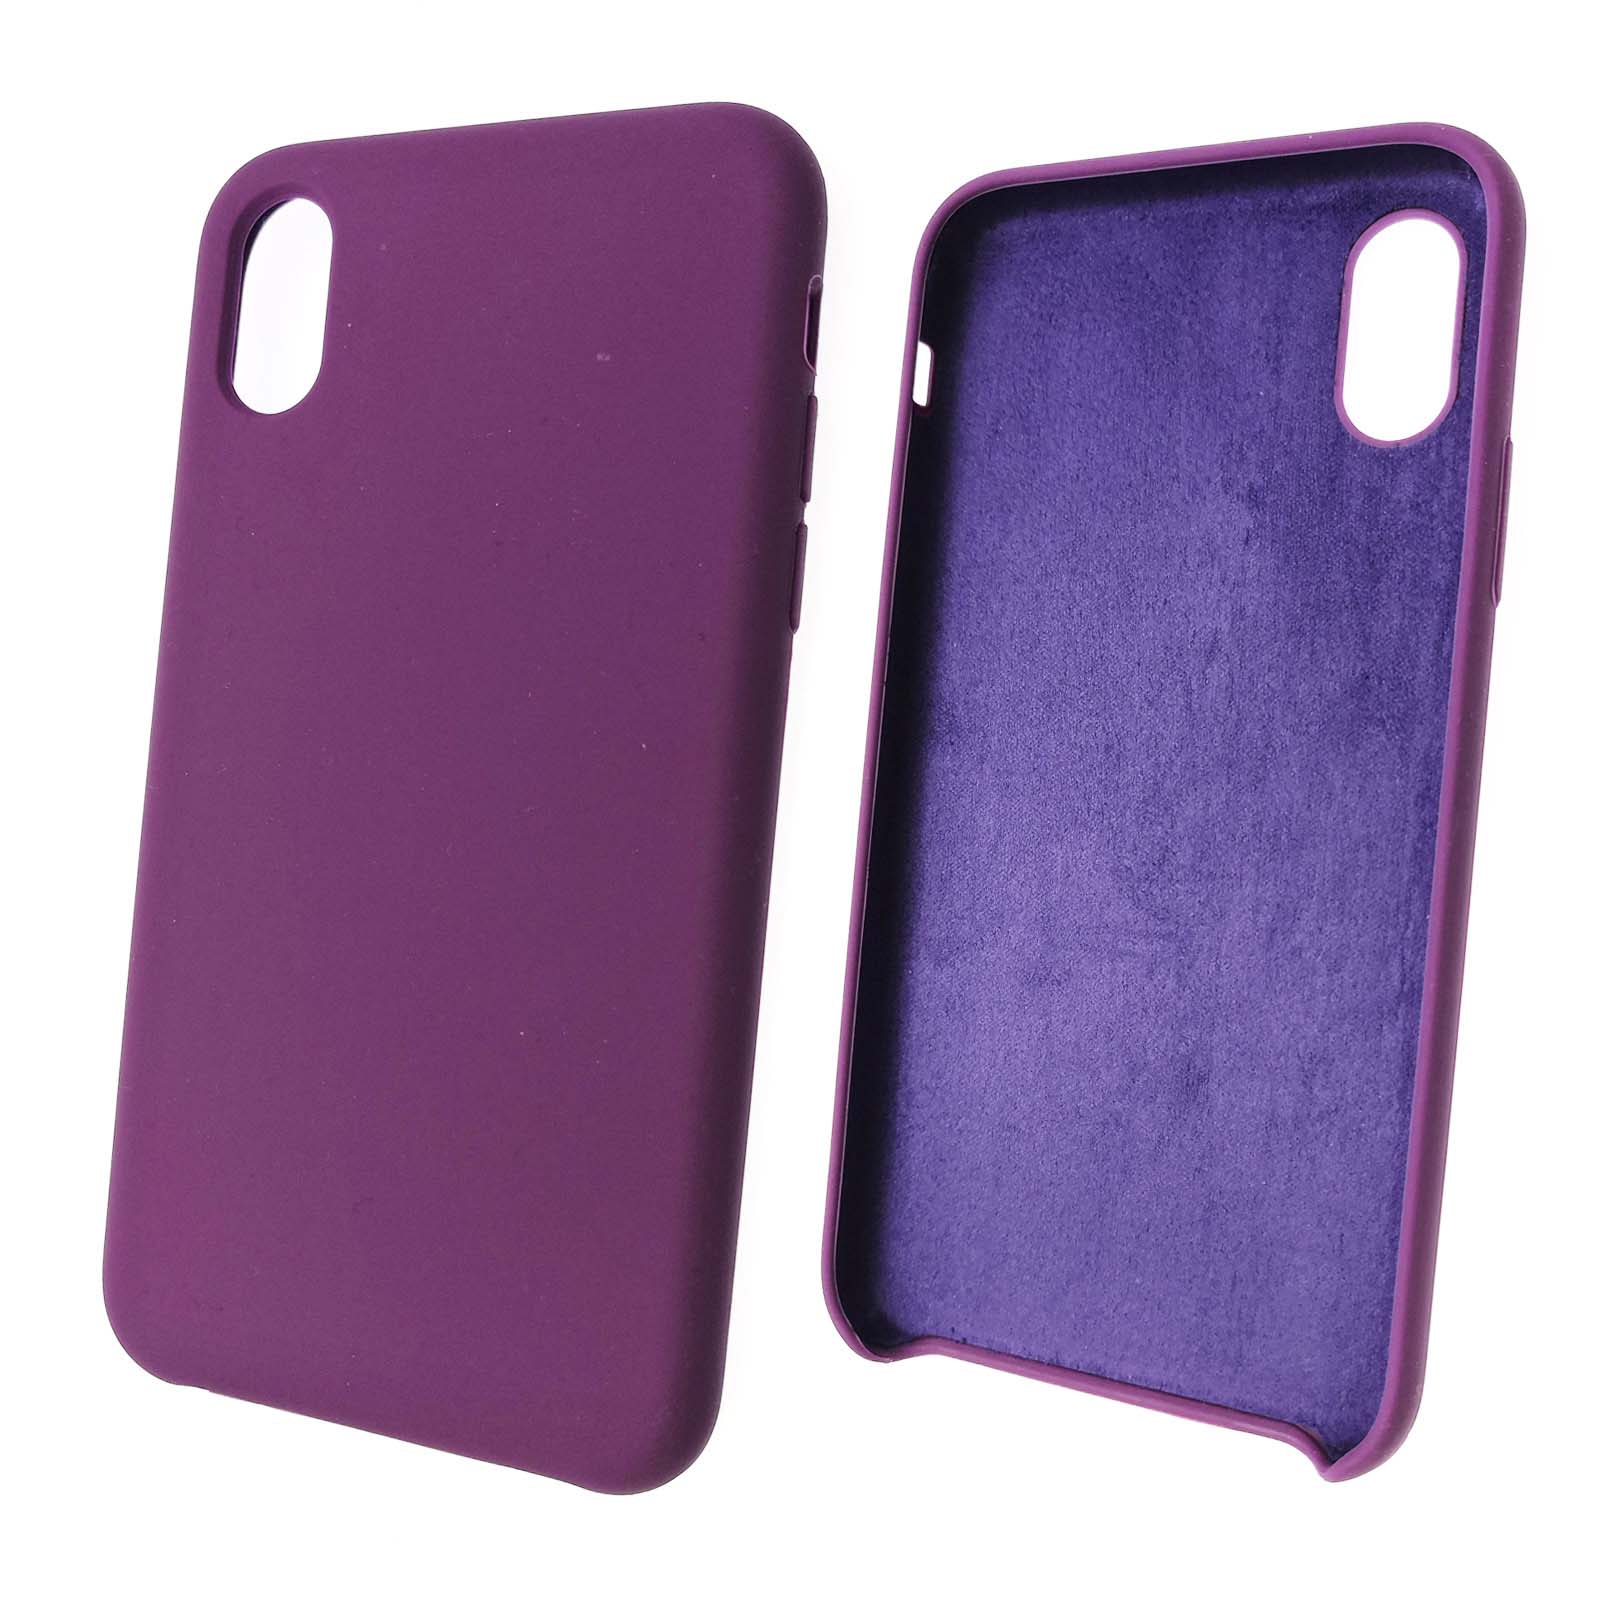 Чехол накладка Silicon Case для APPLE iPhone X, iPhone XS, силикон, бархат, цвет фиолетовый.